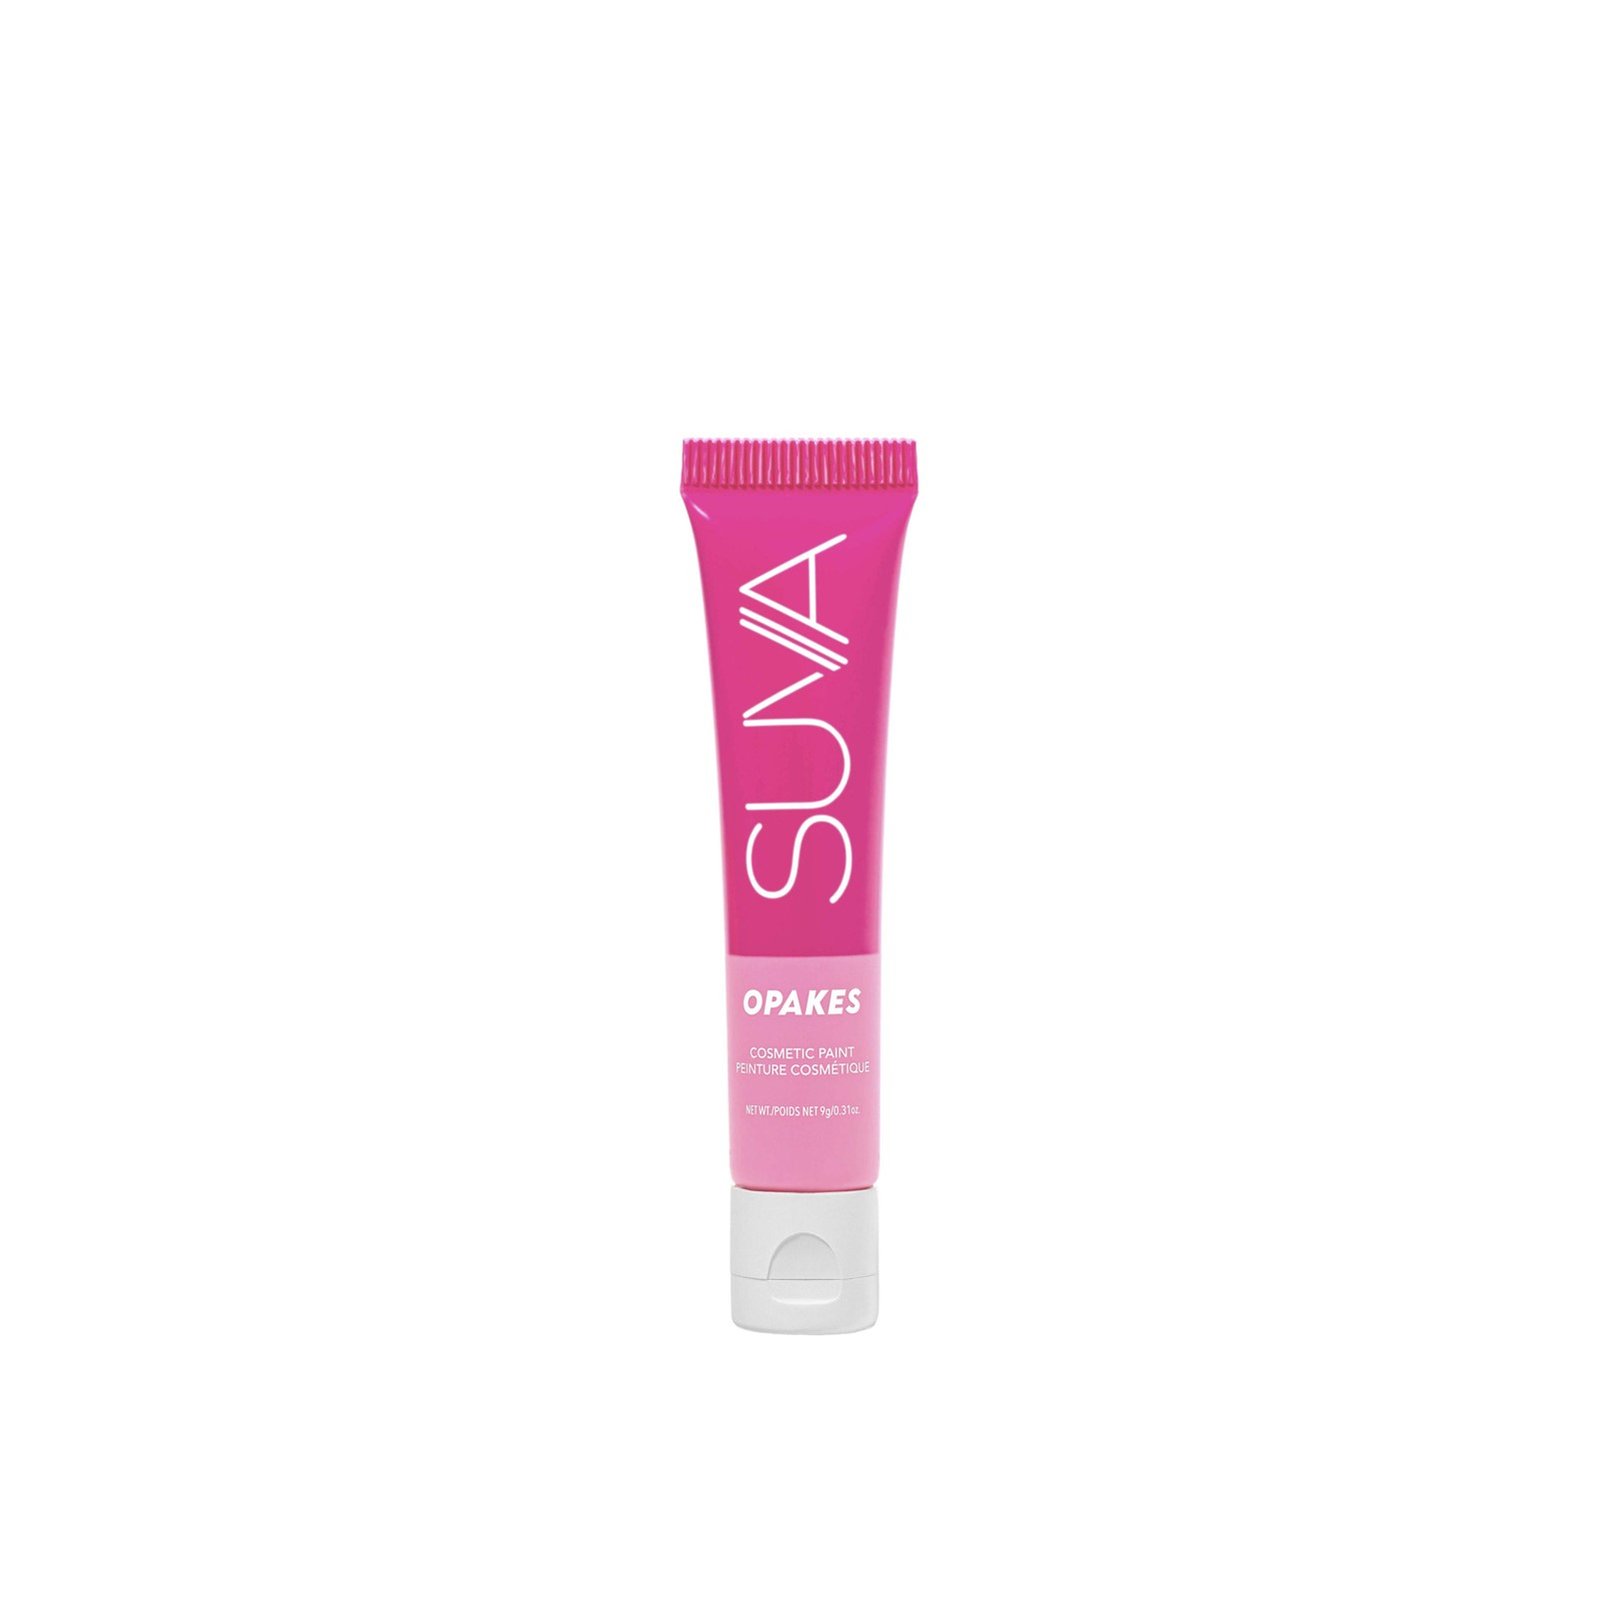 SUVA Beauty Opakes Cosmetic Paint Pogo Pink 9g (0.31 oz)